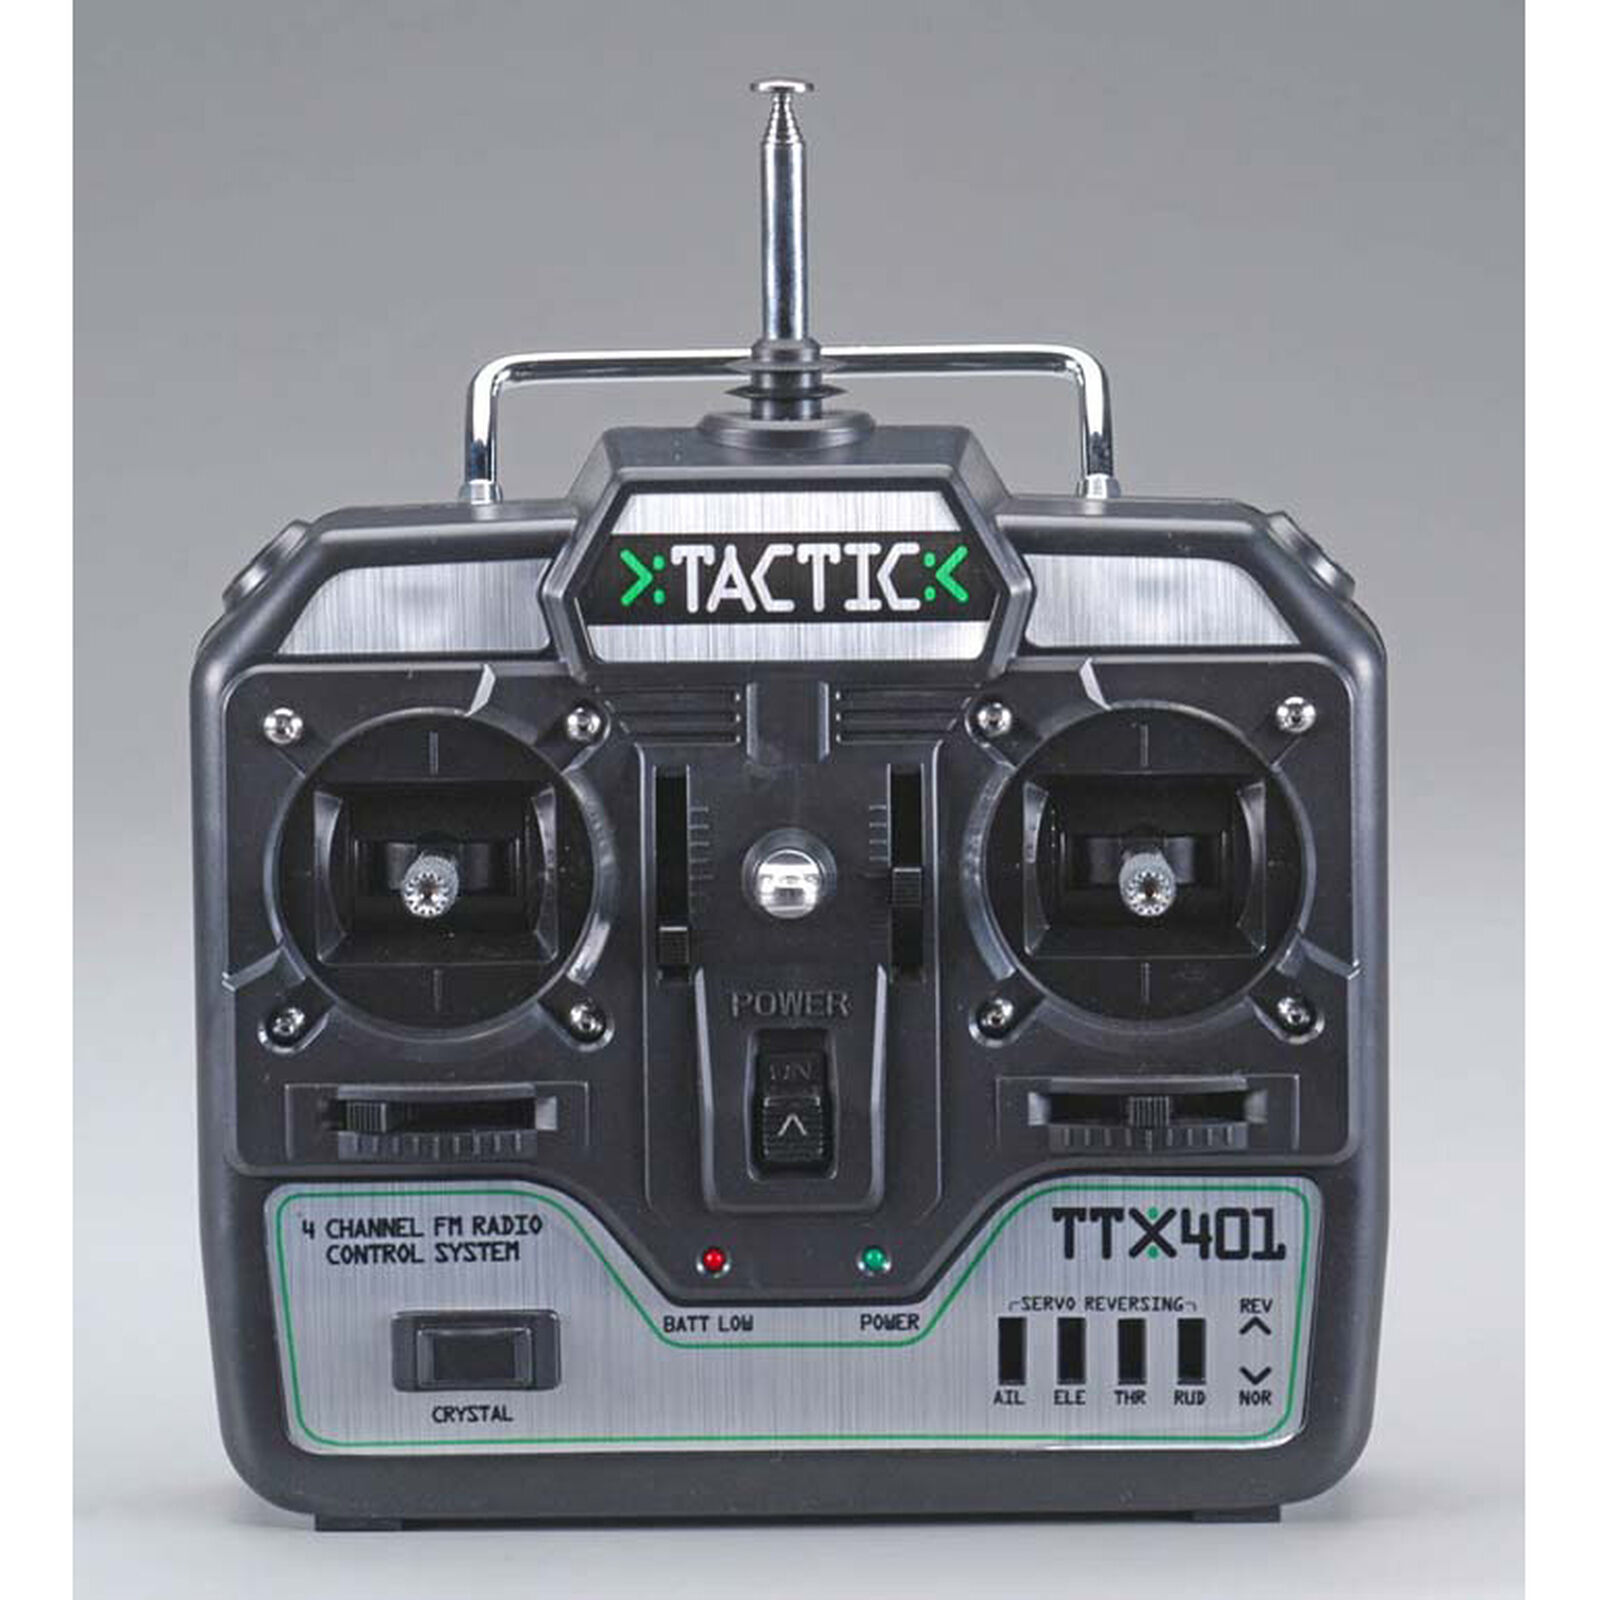 TTX401 Transmitter 4-Channel FM